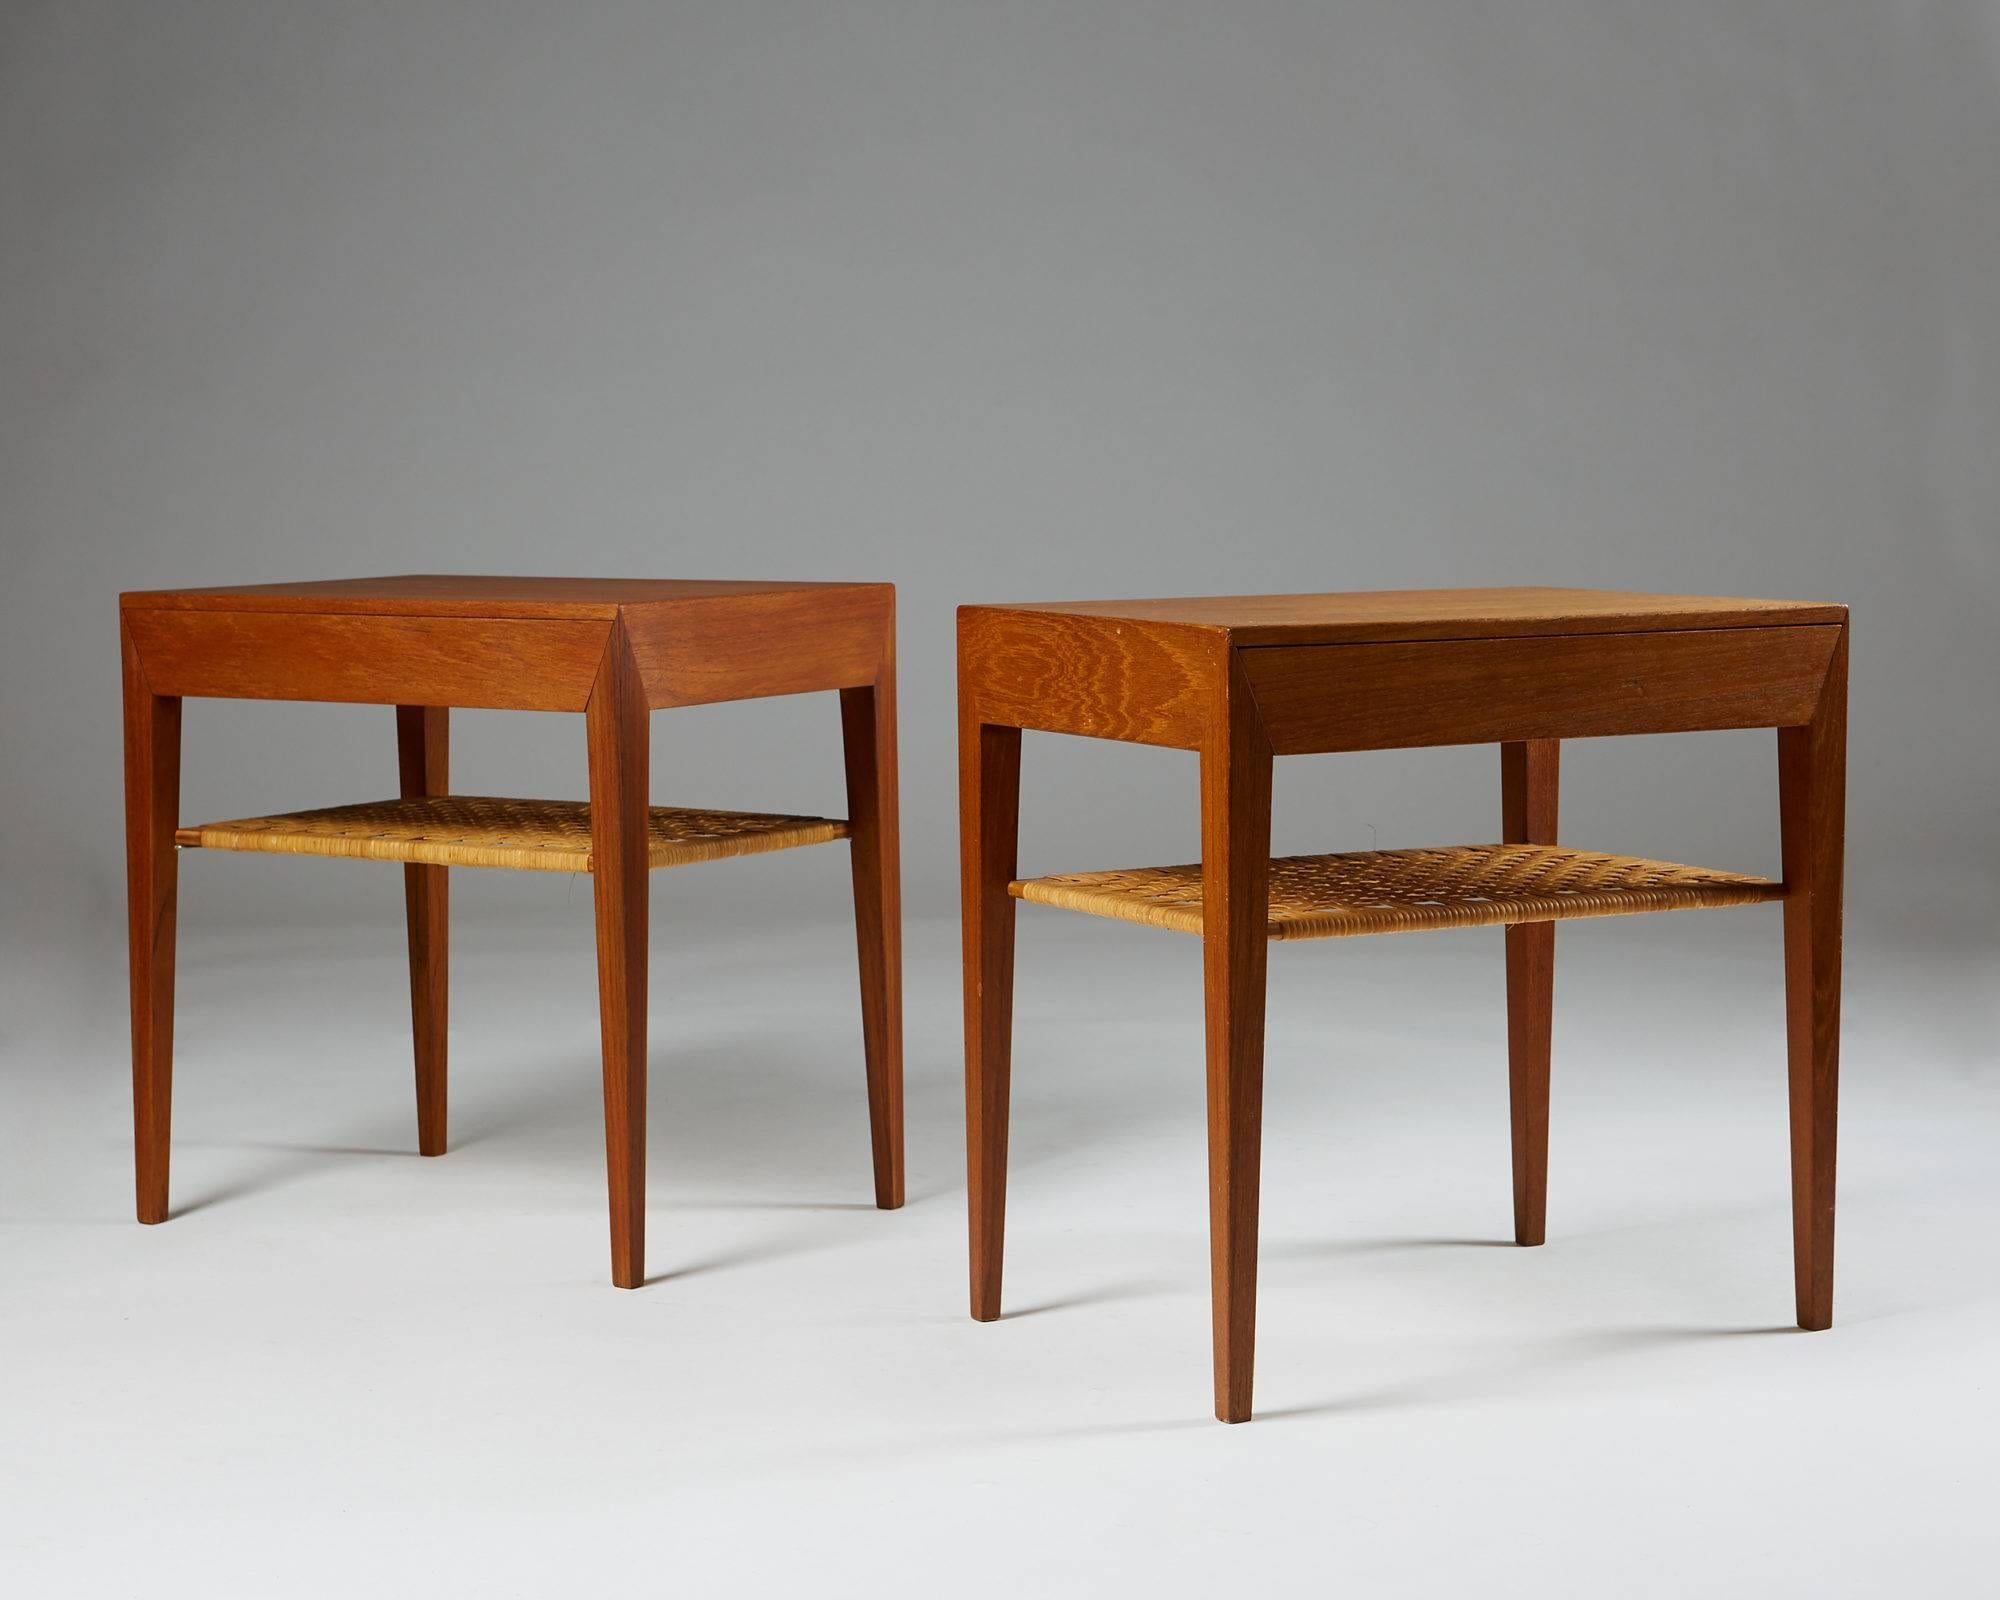 Pair of bedside/lamp tables designed by Severin Hansen for Haslev, 
Denmark, 1950s.
Teak and cane.

H: 50 cm/ 19 3/4''
L: 50 cm/ 19 3/4''
D: 35 cm/ 13 3/4''